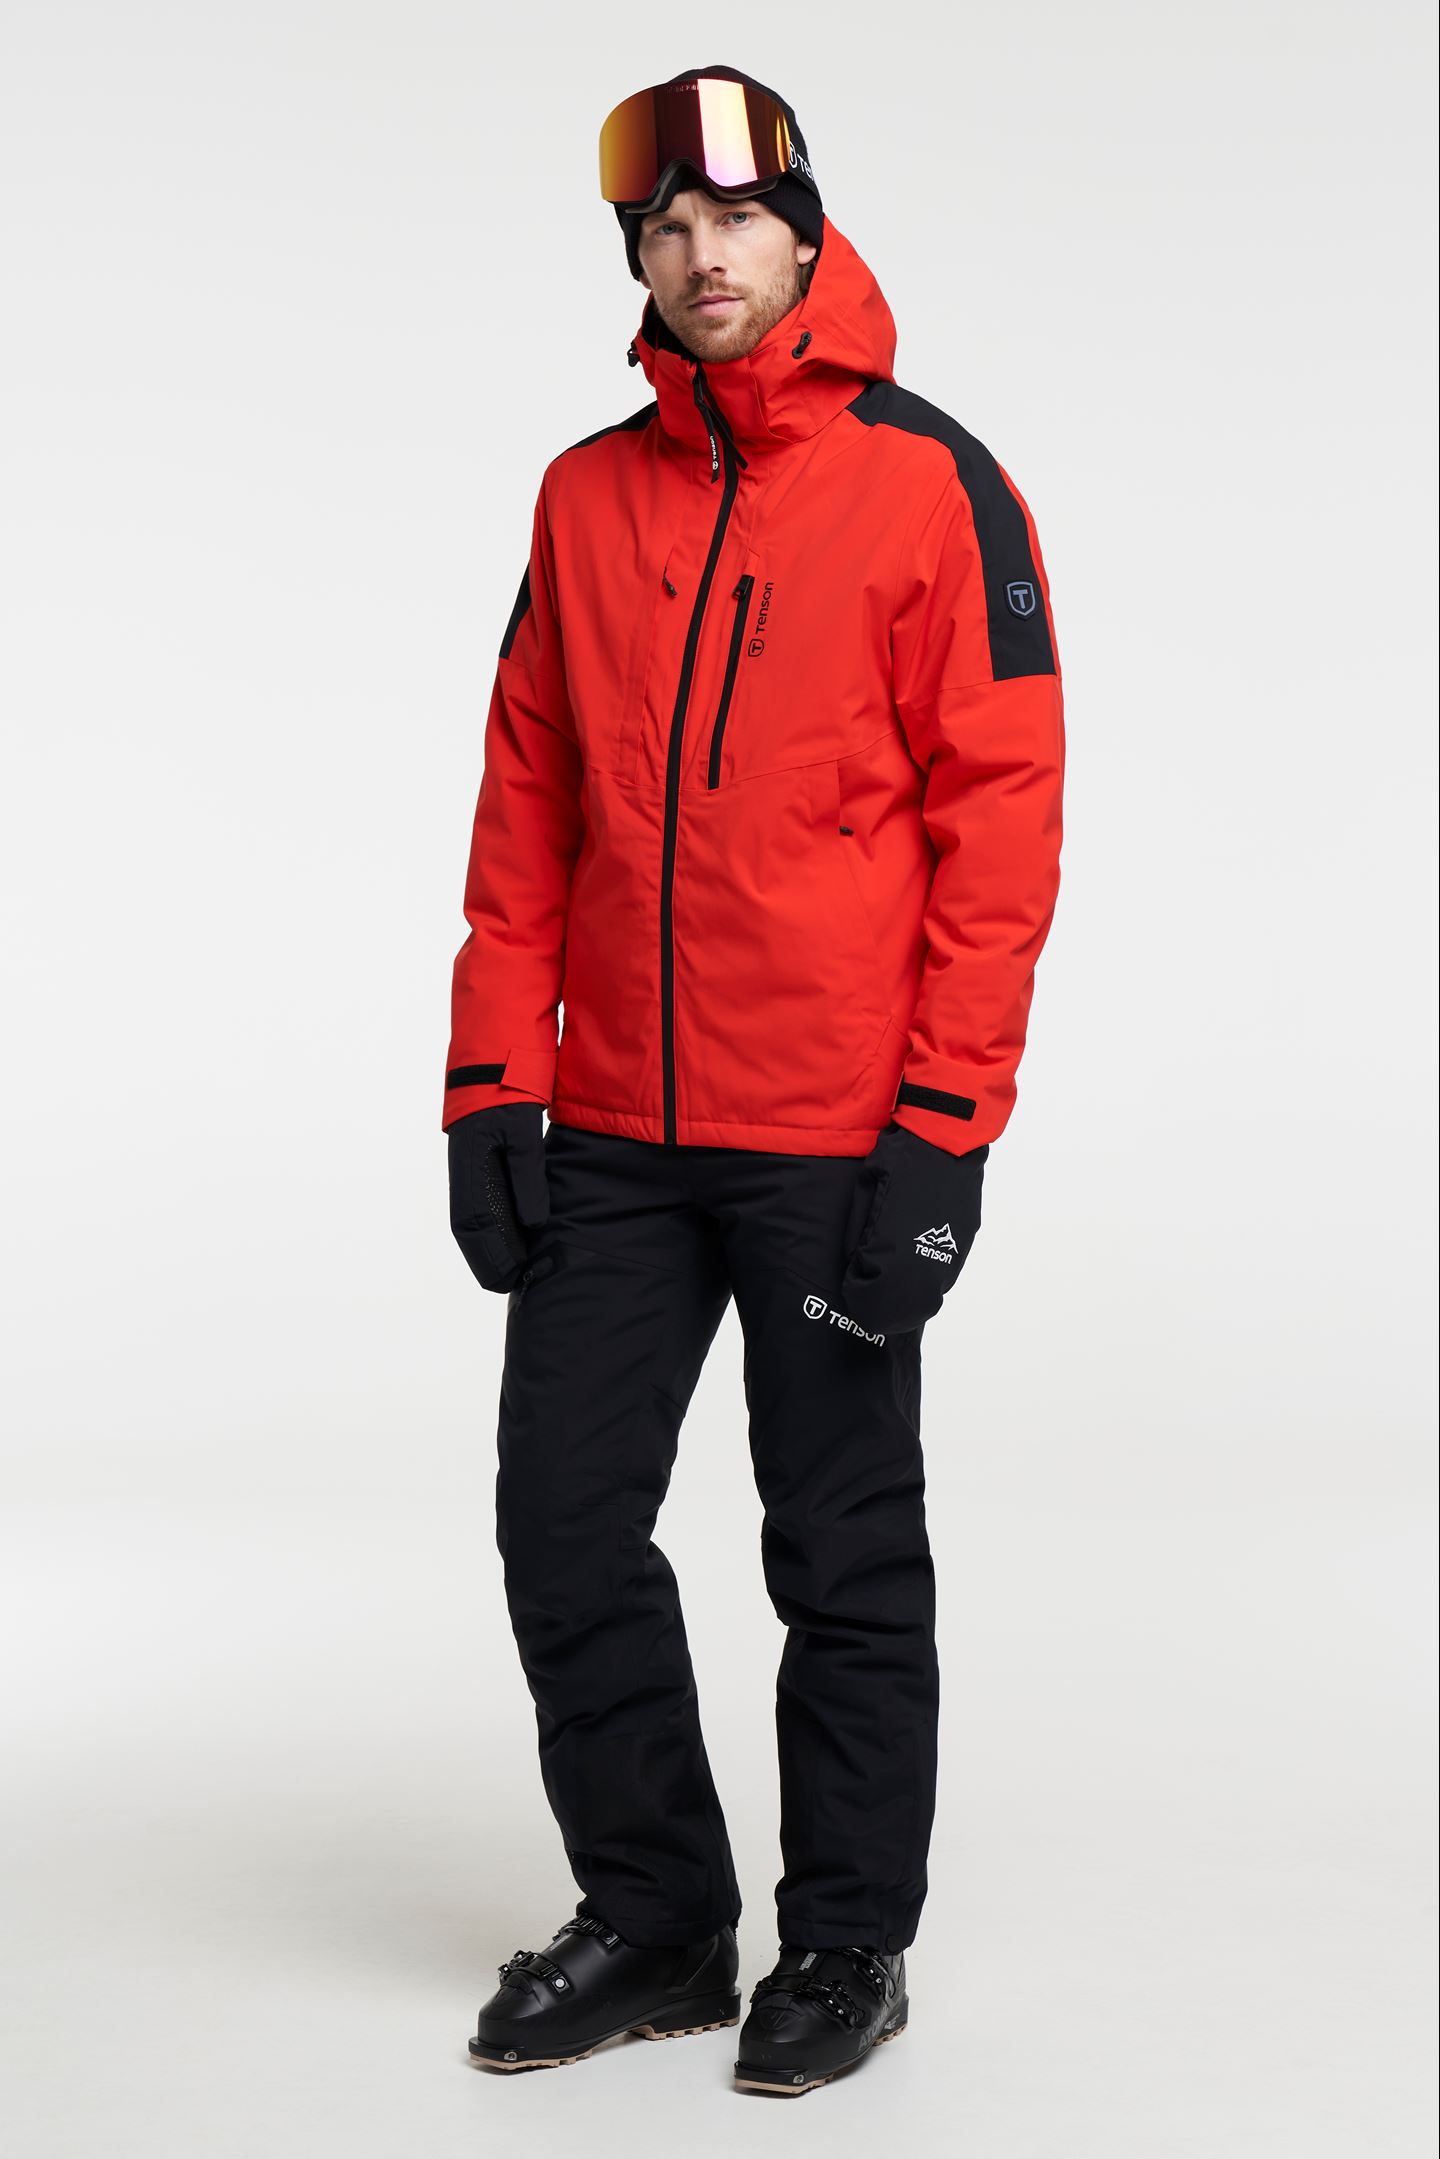 Vel Pamflet menigte Core Ski Jacket - Warme ski-jas - Orange